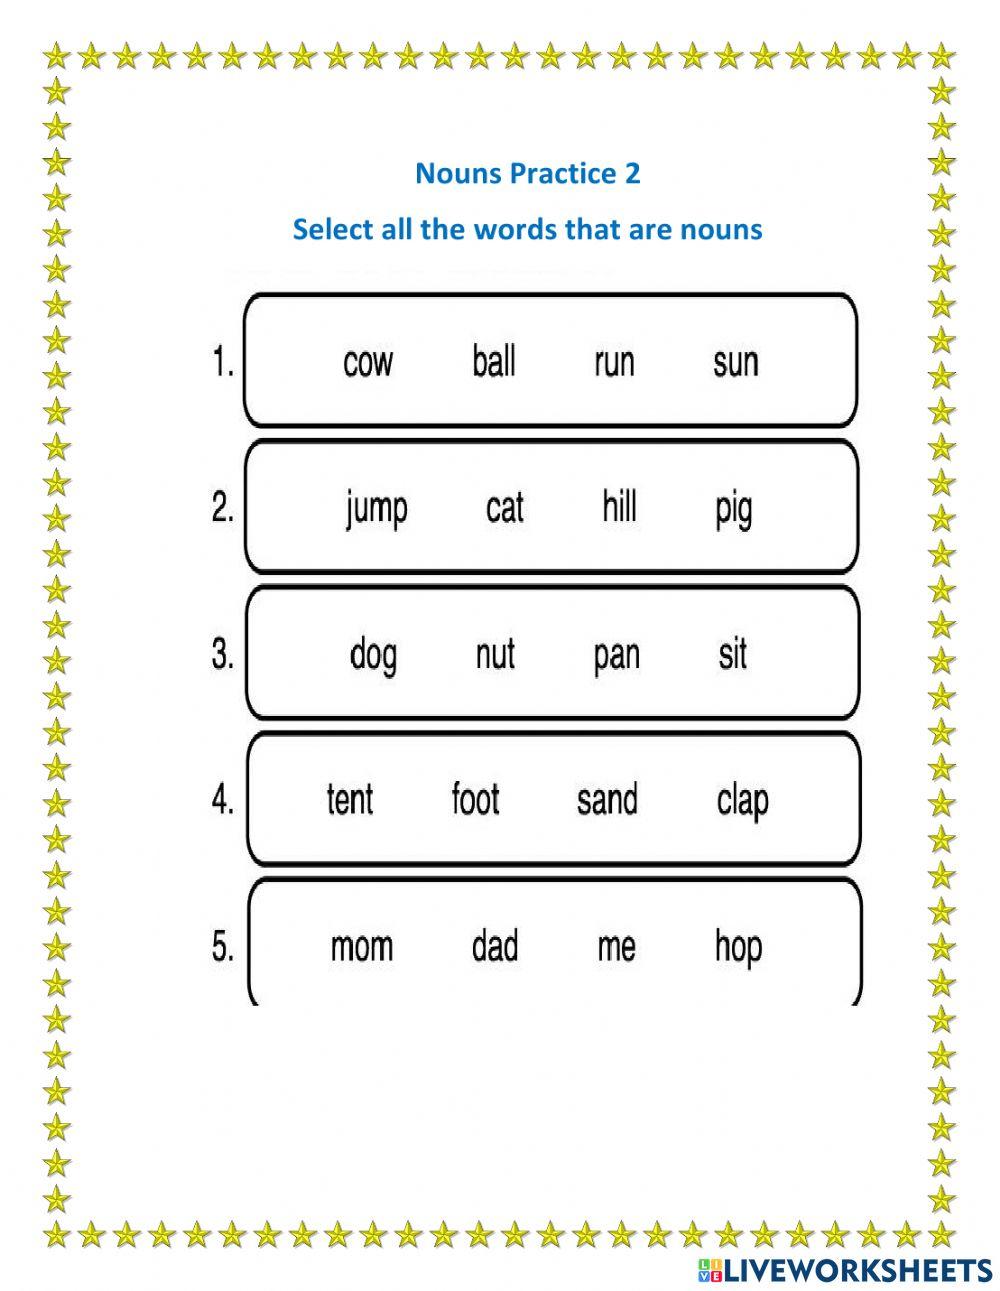 Nouns practice 2